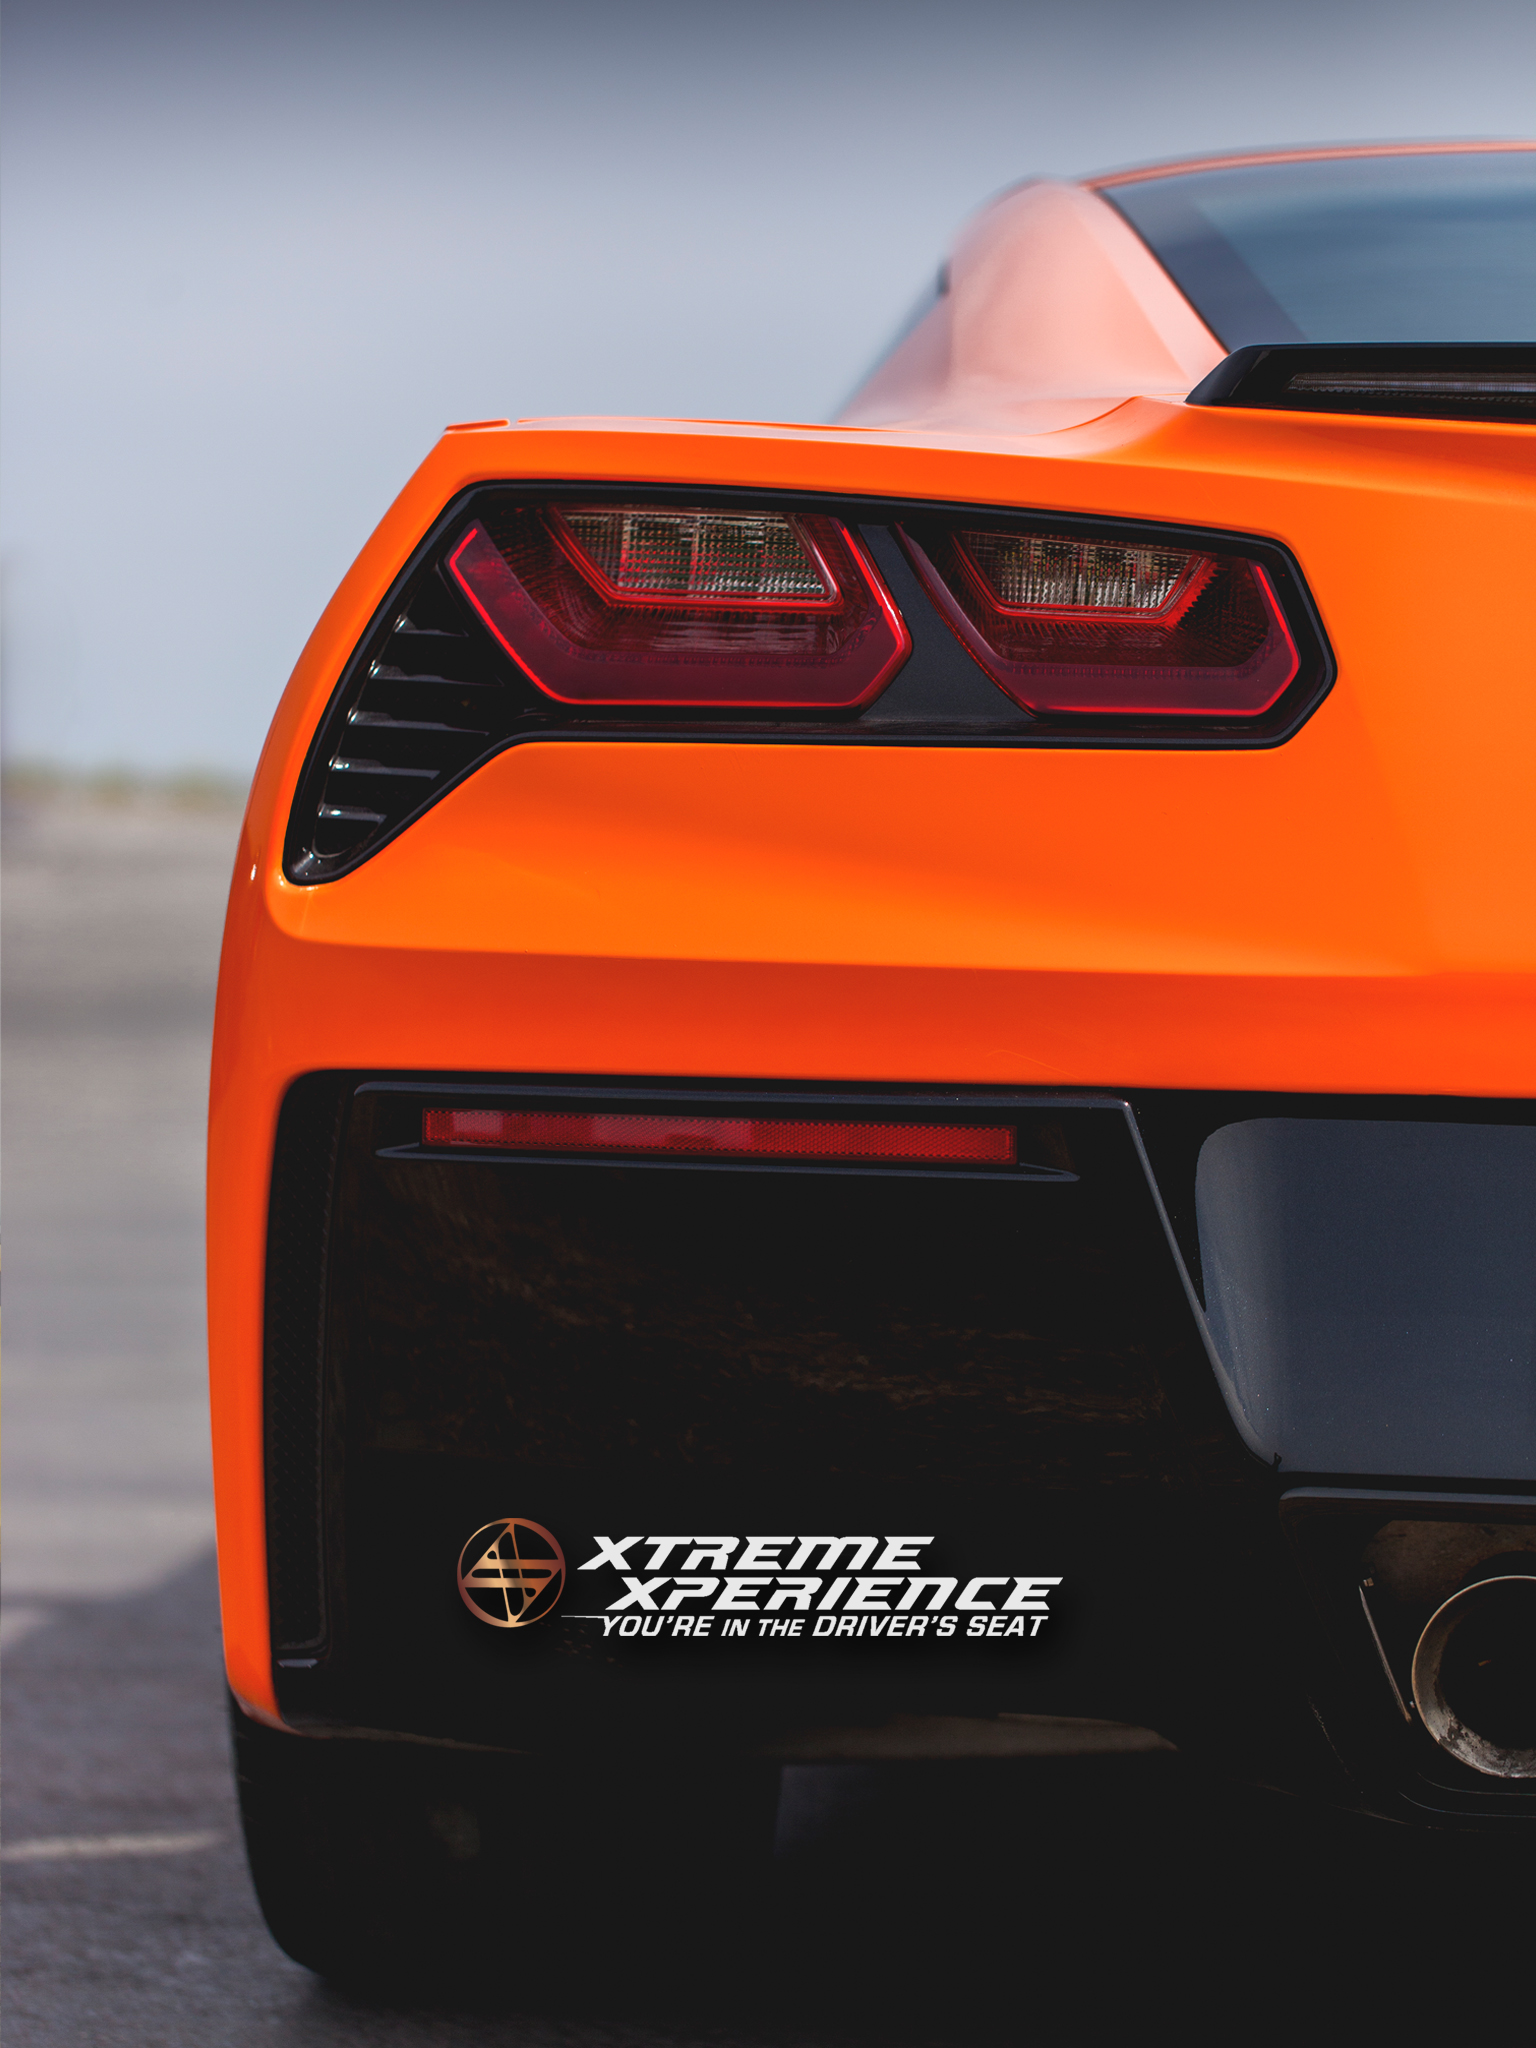 With Xtreme Xperience S Corvette C7 Stingray Desktop Wallpaper